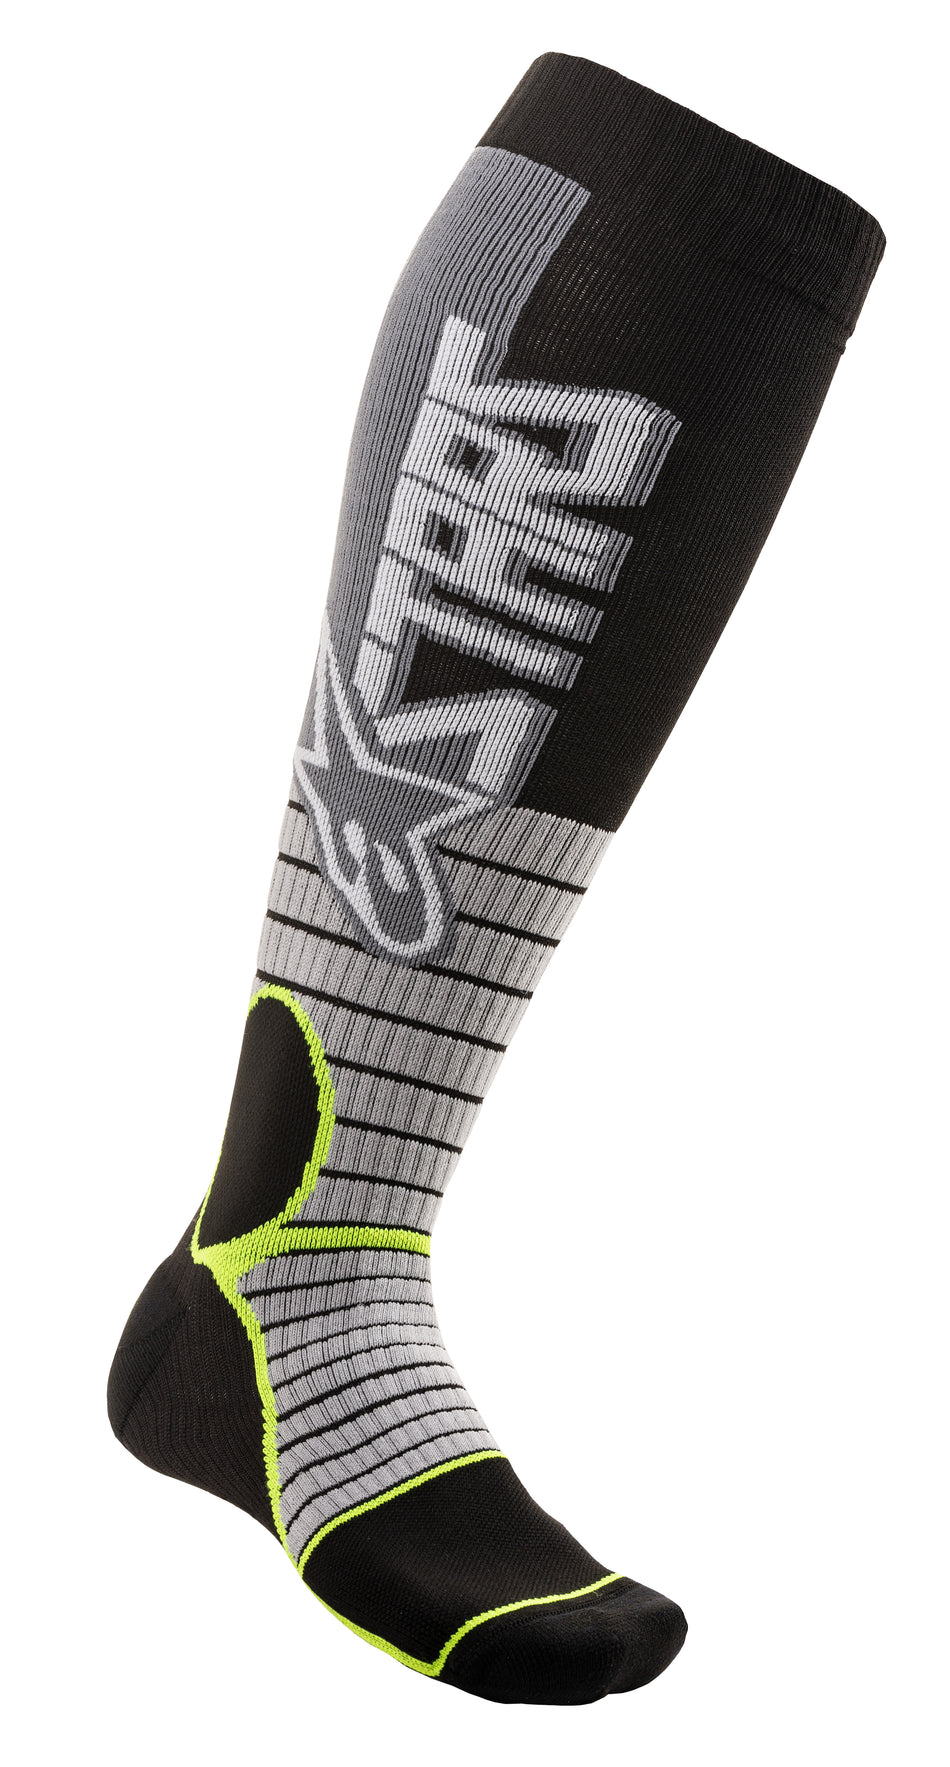 ALPINESTARS Mx Pro Socks Cool Grey/Yellow Medium 4701520-905-M